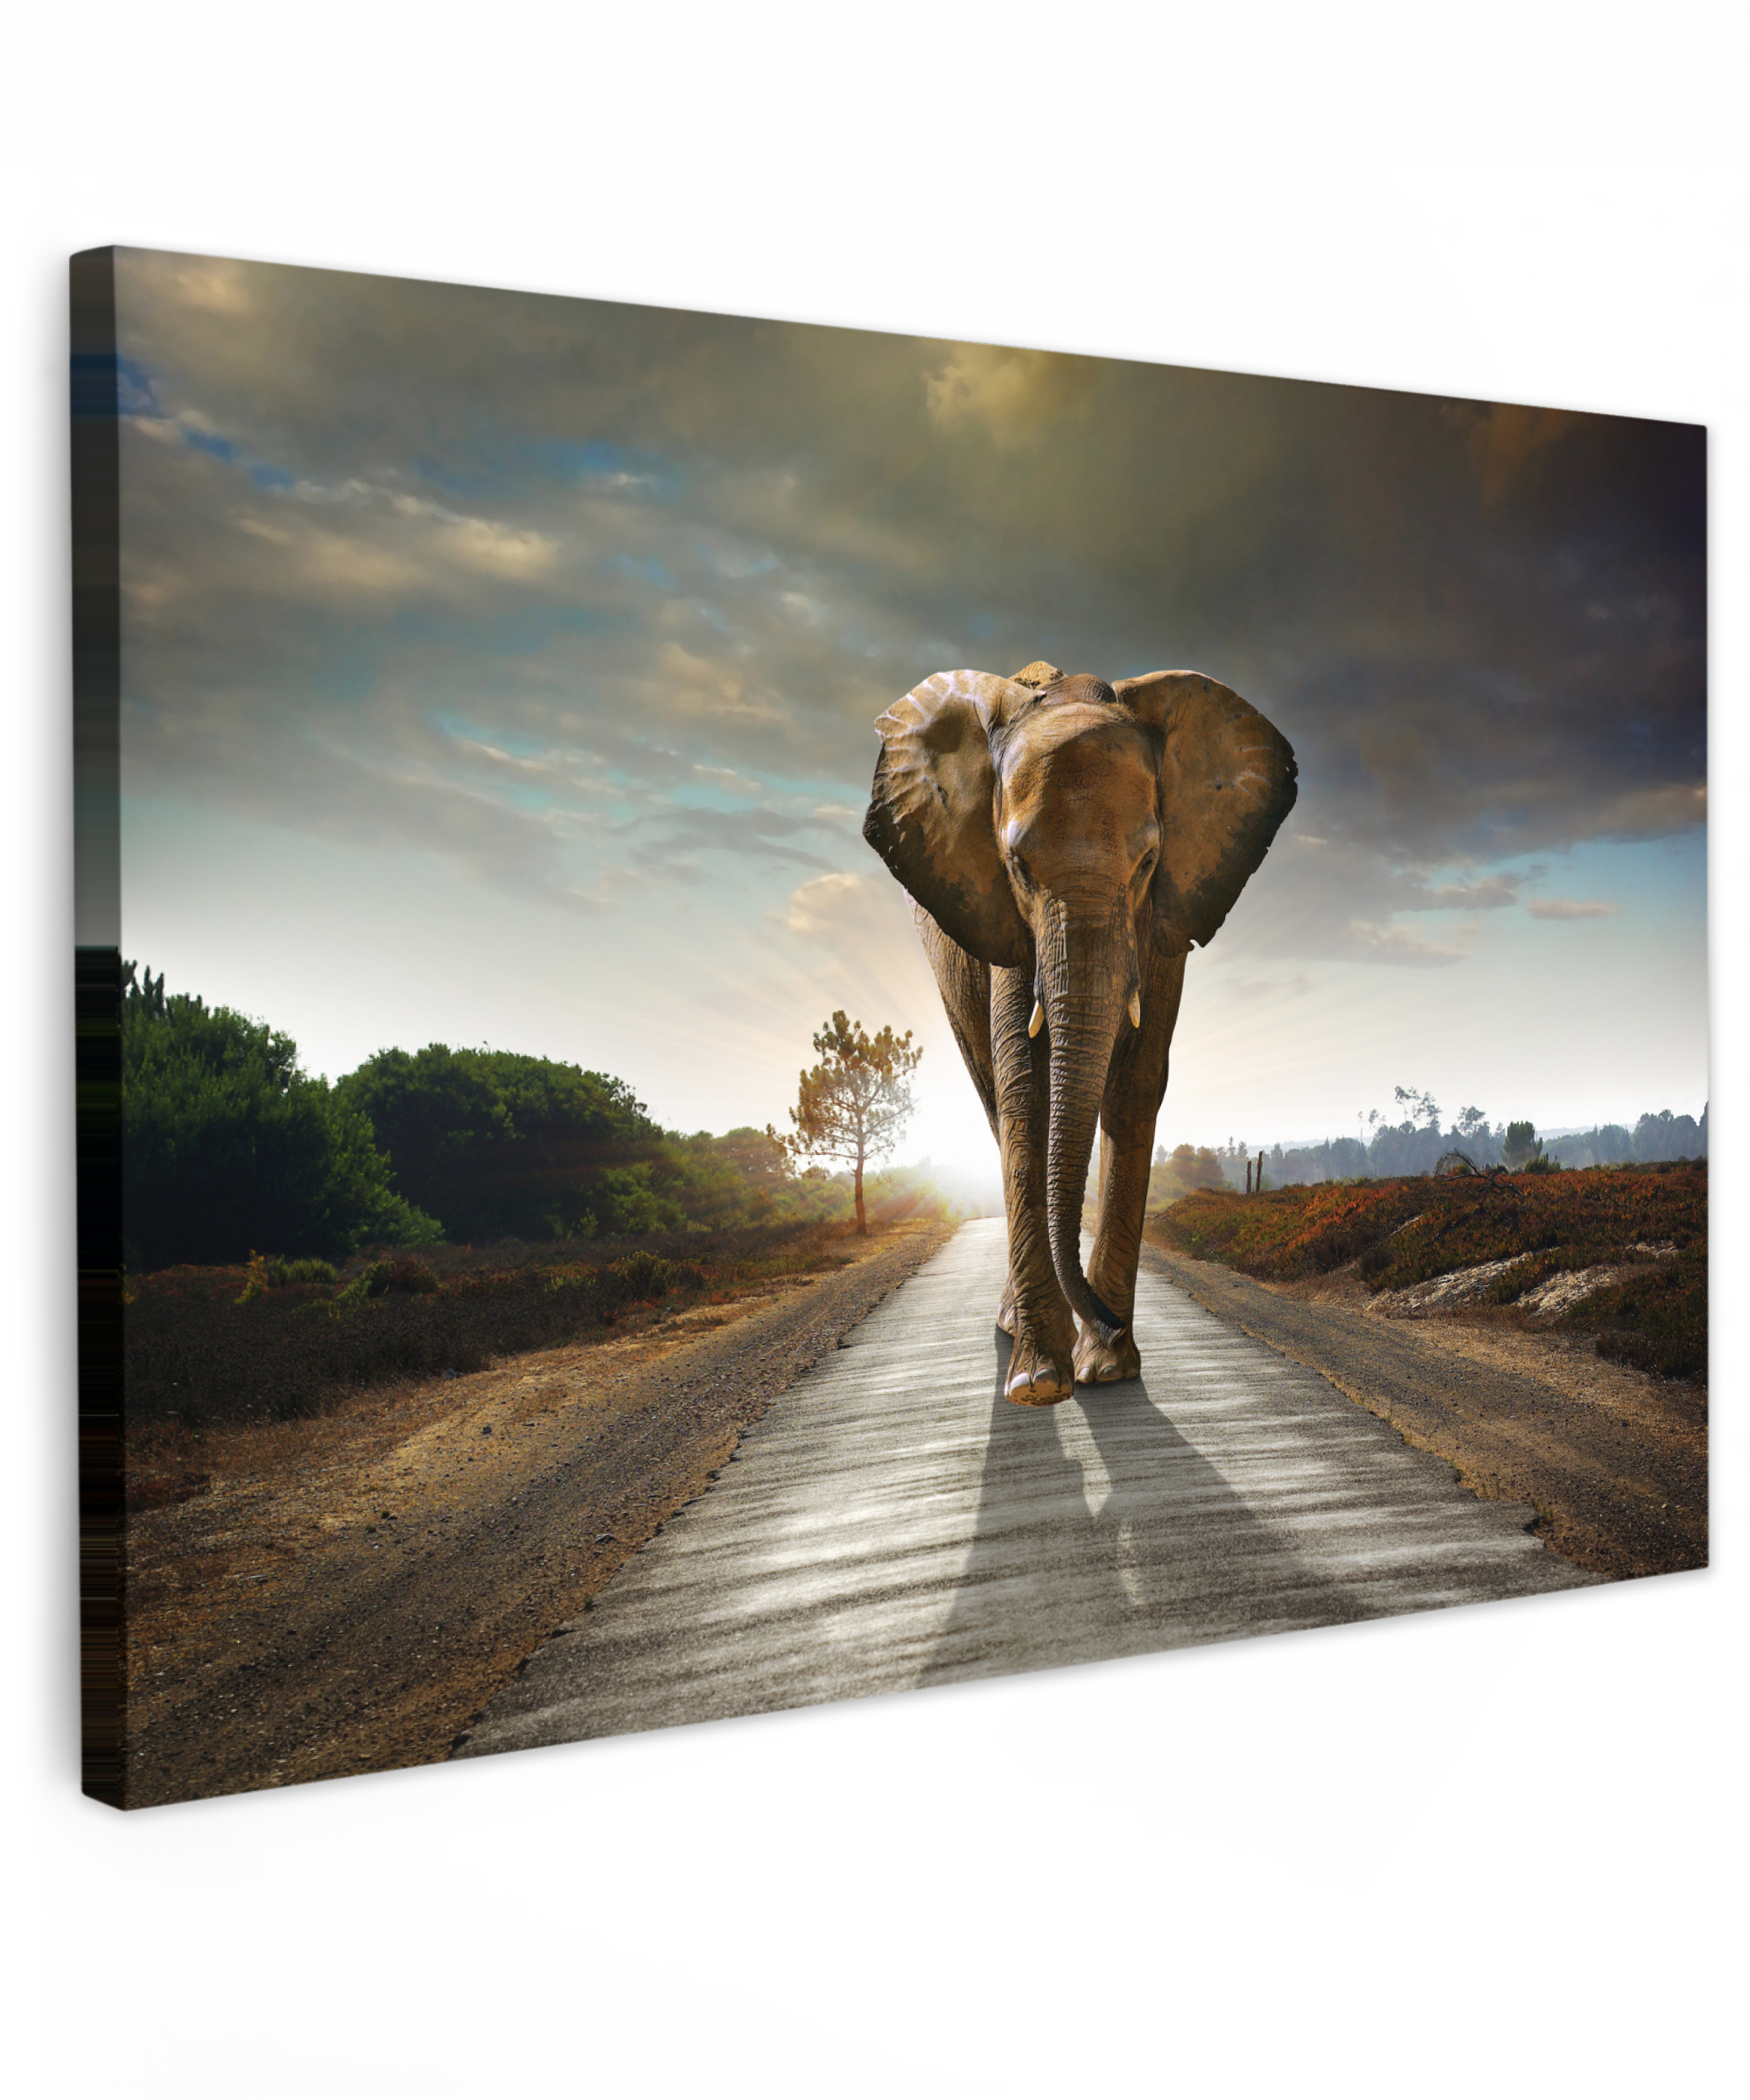 Leinwandbild - Elefant - Straße - Tiere - Sonnenuntergang - Landschaft